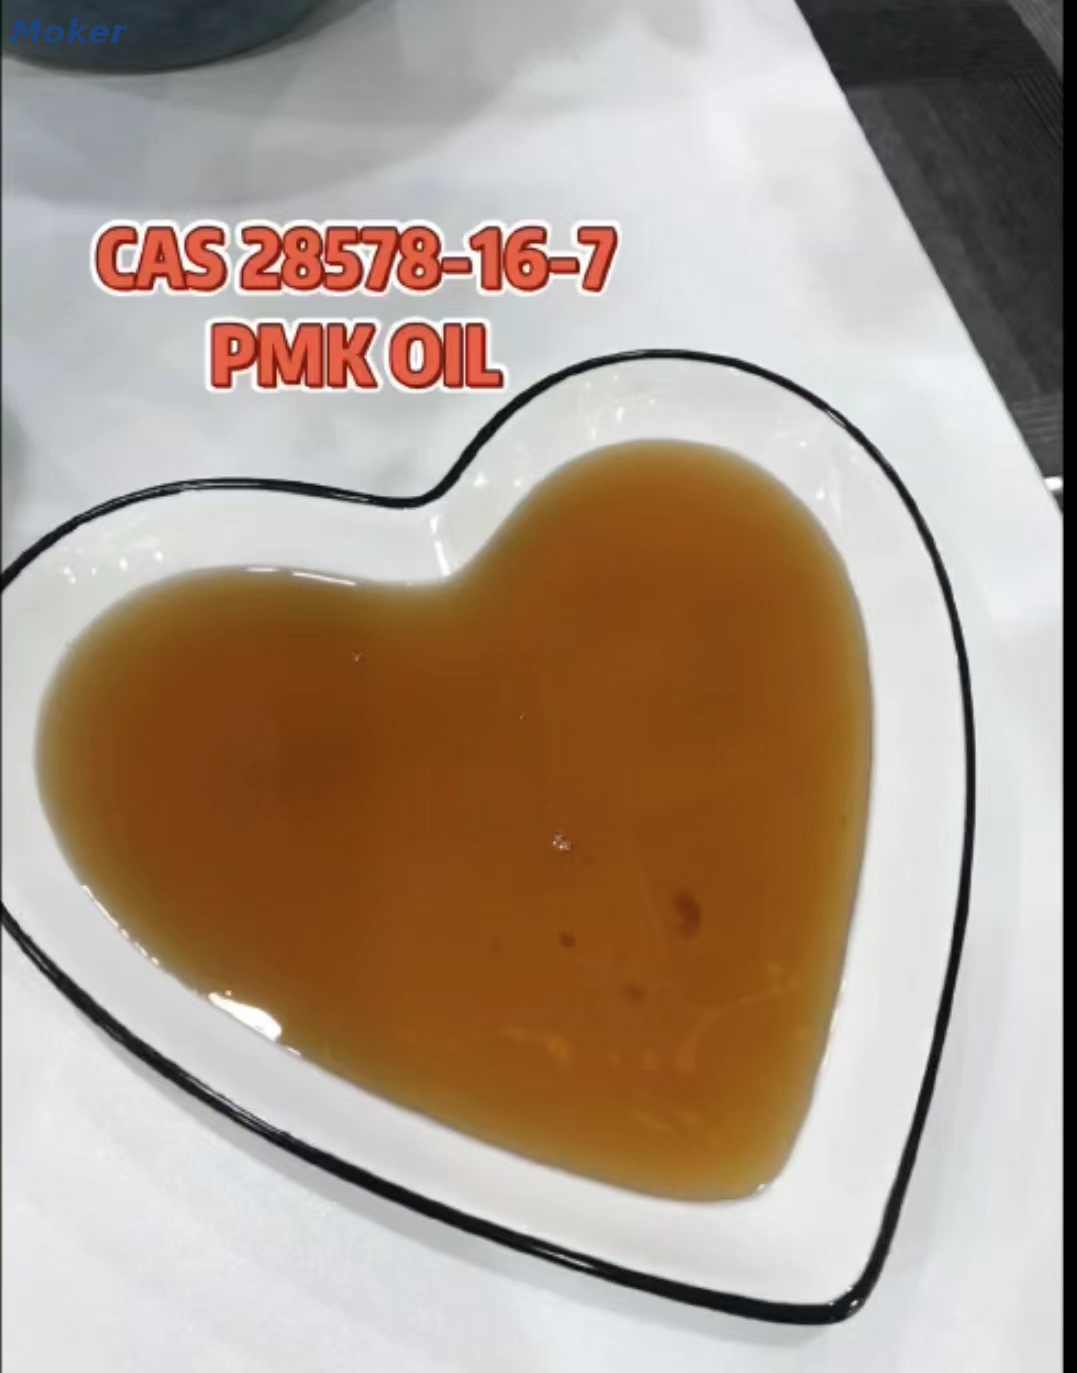 Cas 28578-16-7 Pmk Oil Recipe Pmk Ethyl Glycidate Powder 